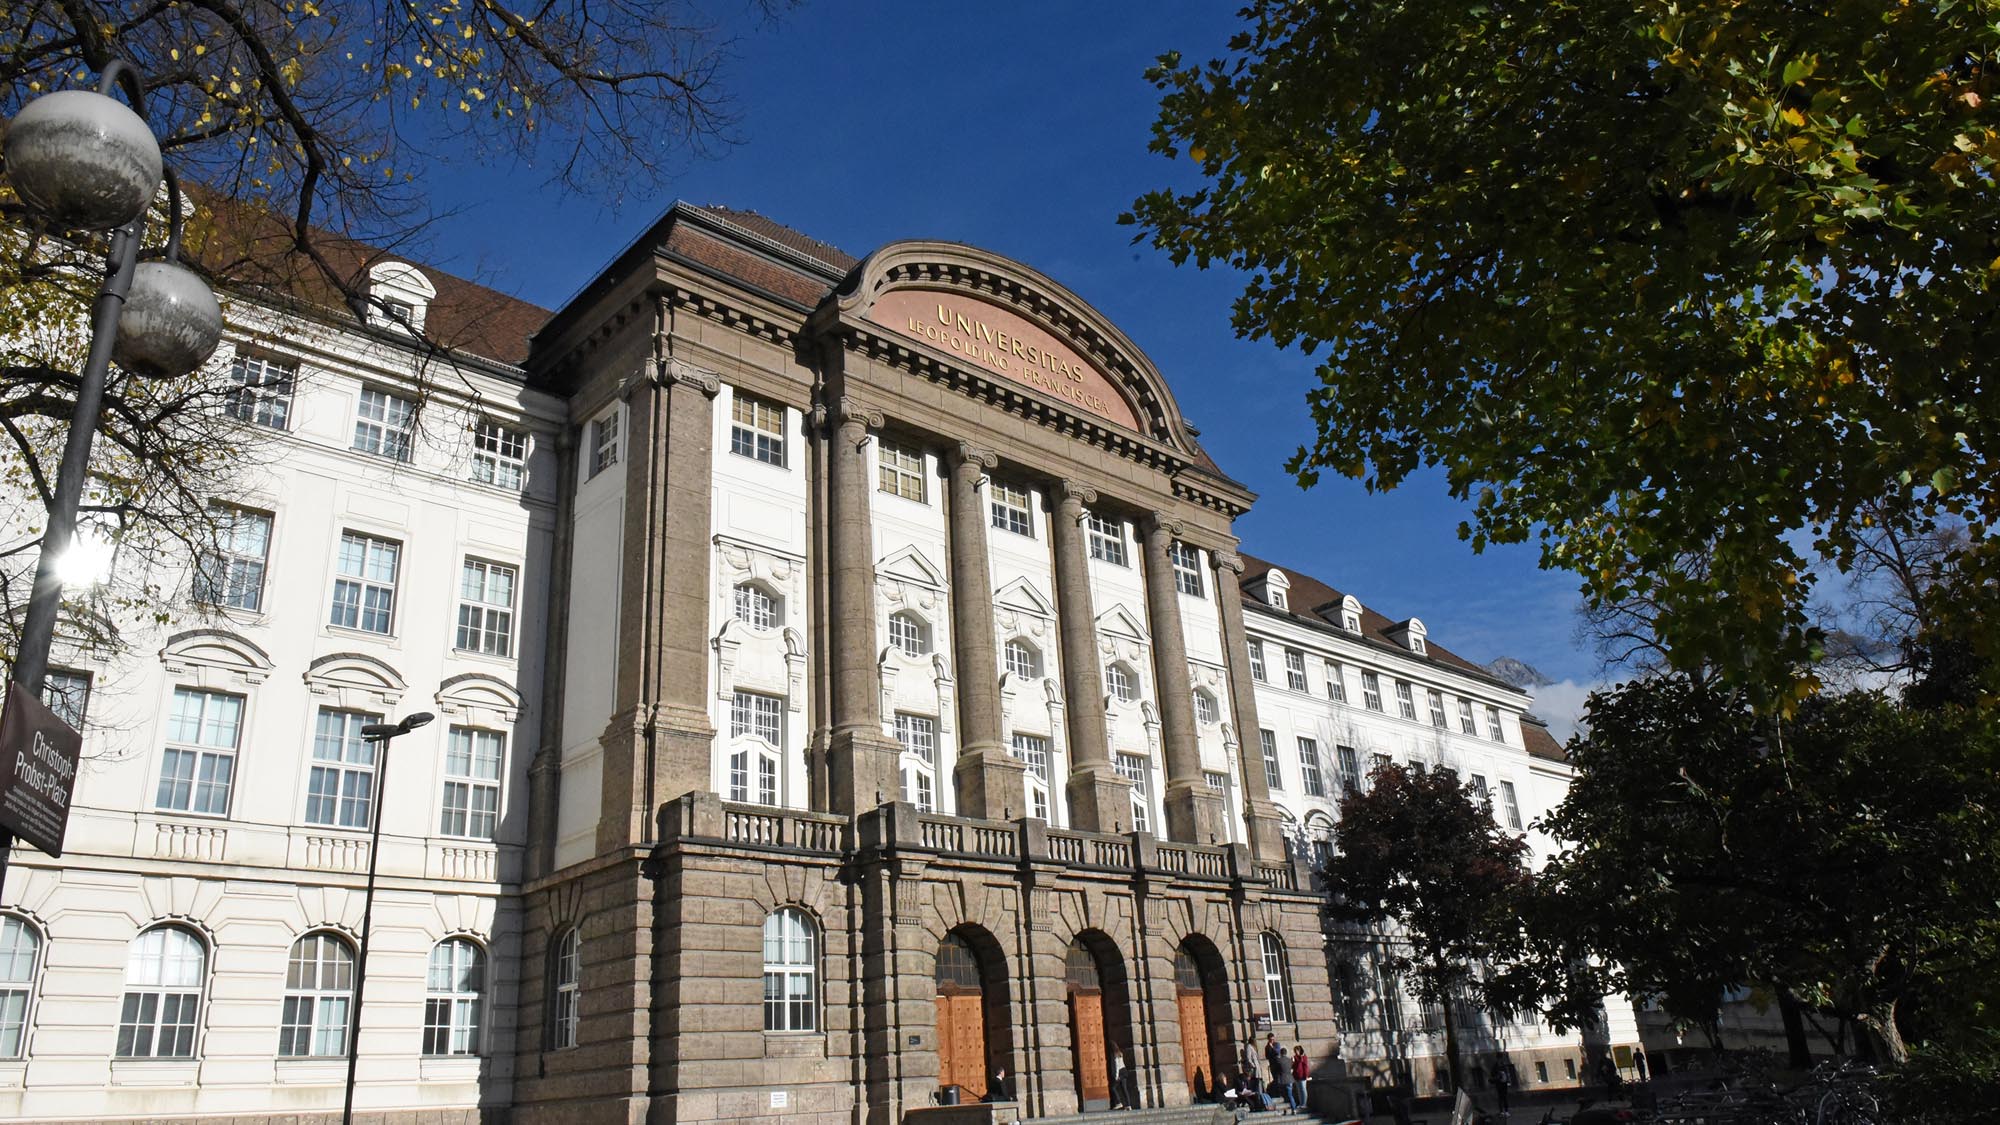 The building of the Leopold Franzens University Innsbruck